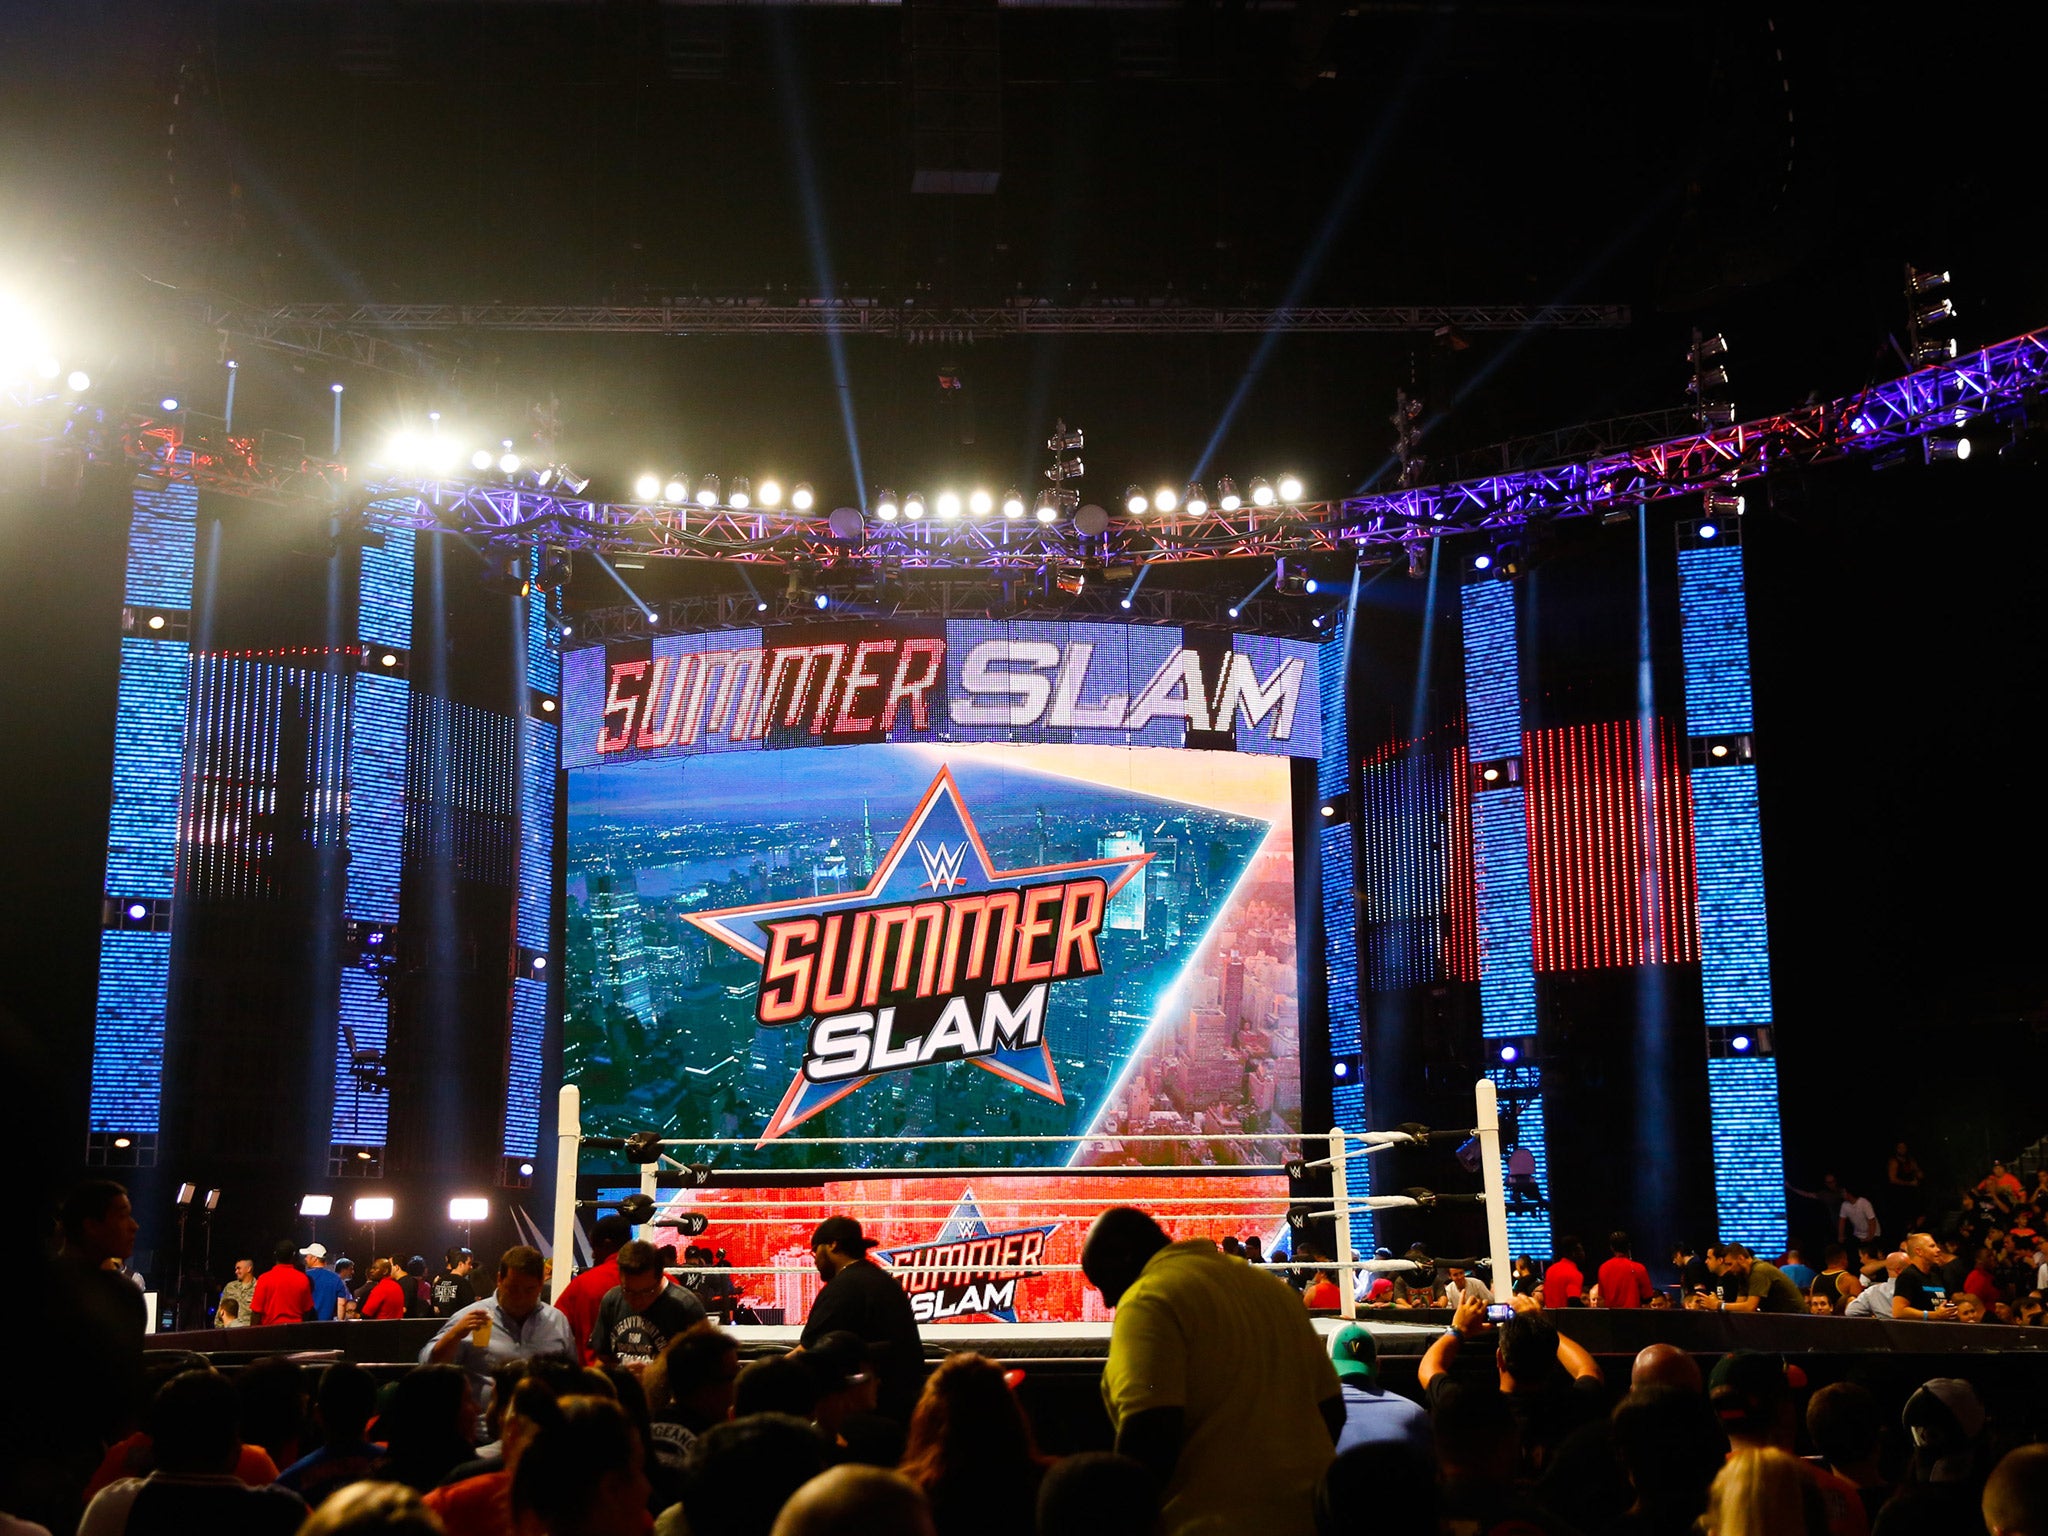 WWE SummerSlam sees Brock Lesnar return to take on Randy Orton